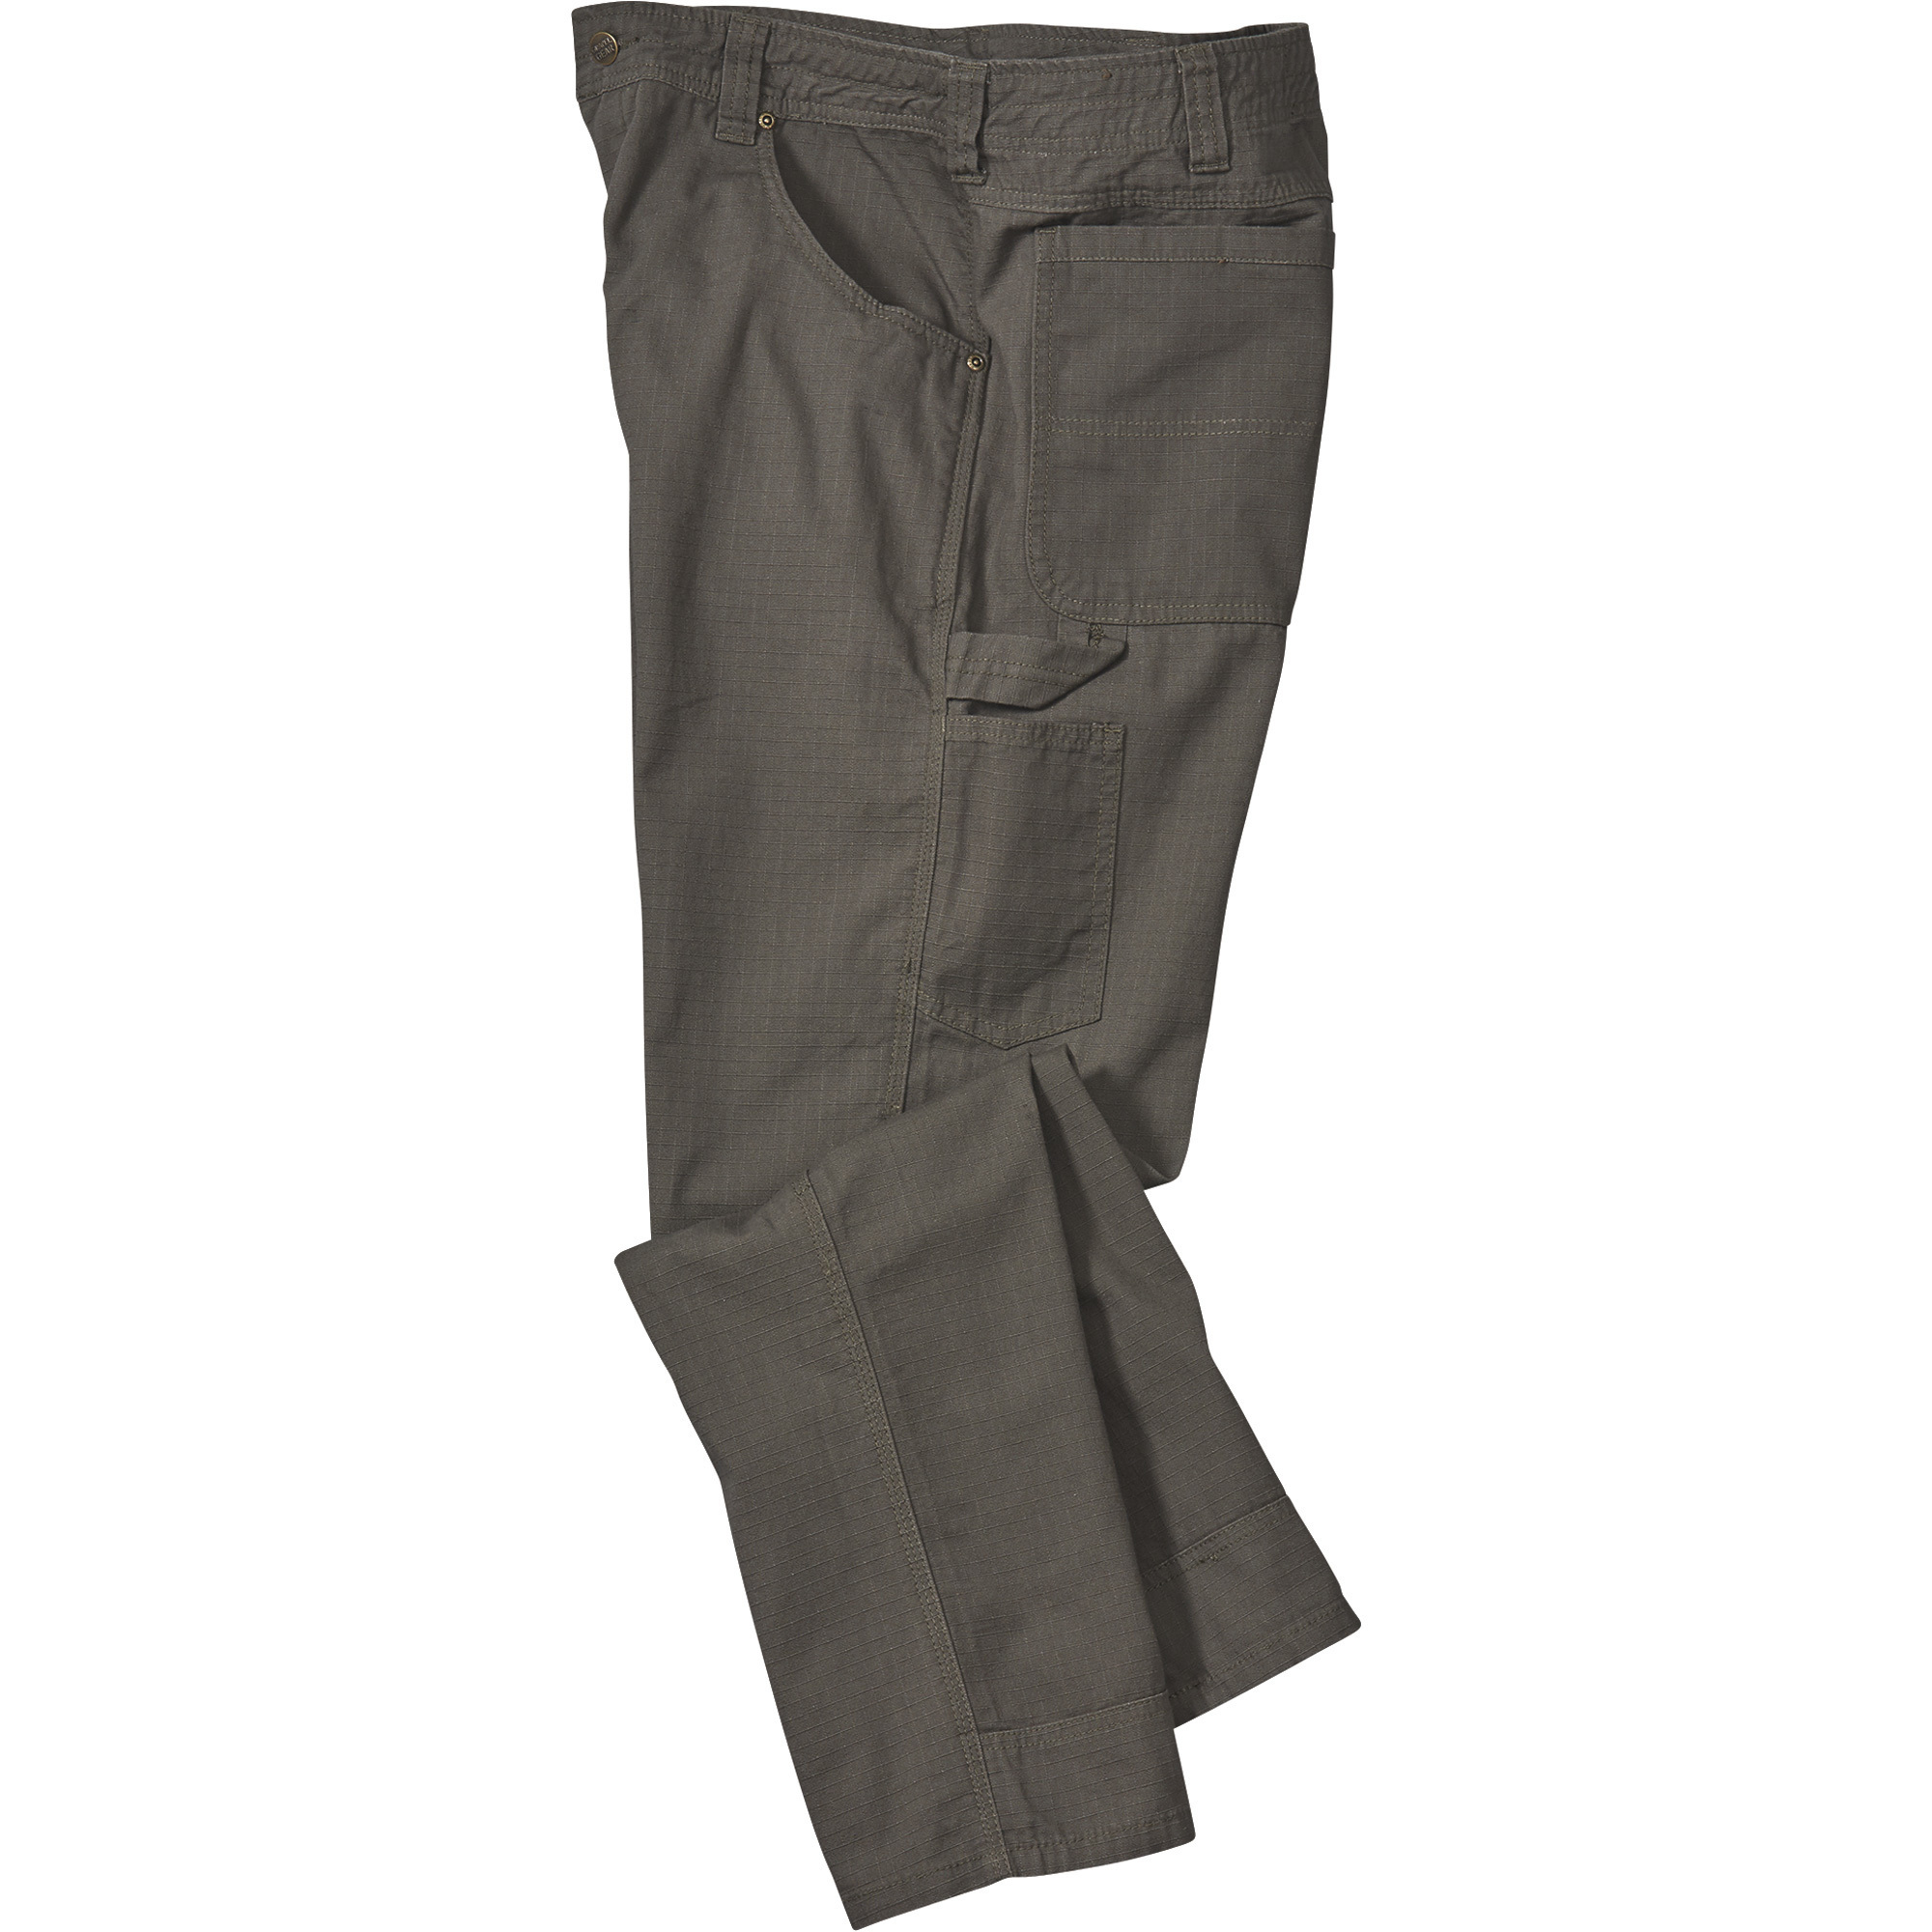 Gravel Gear Men's Cotton Ripstop Carpenter Pants with Teflon Fabric Protector â Moss, 40Inch Waist x 30Inch Inseam